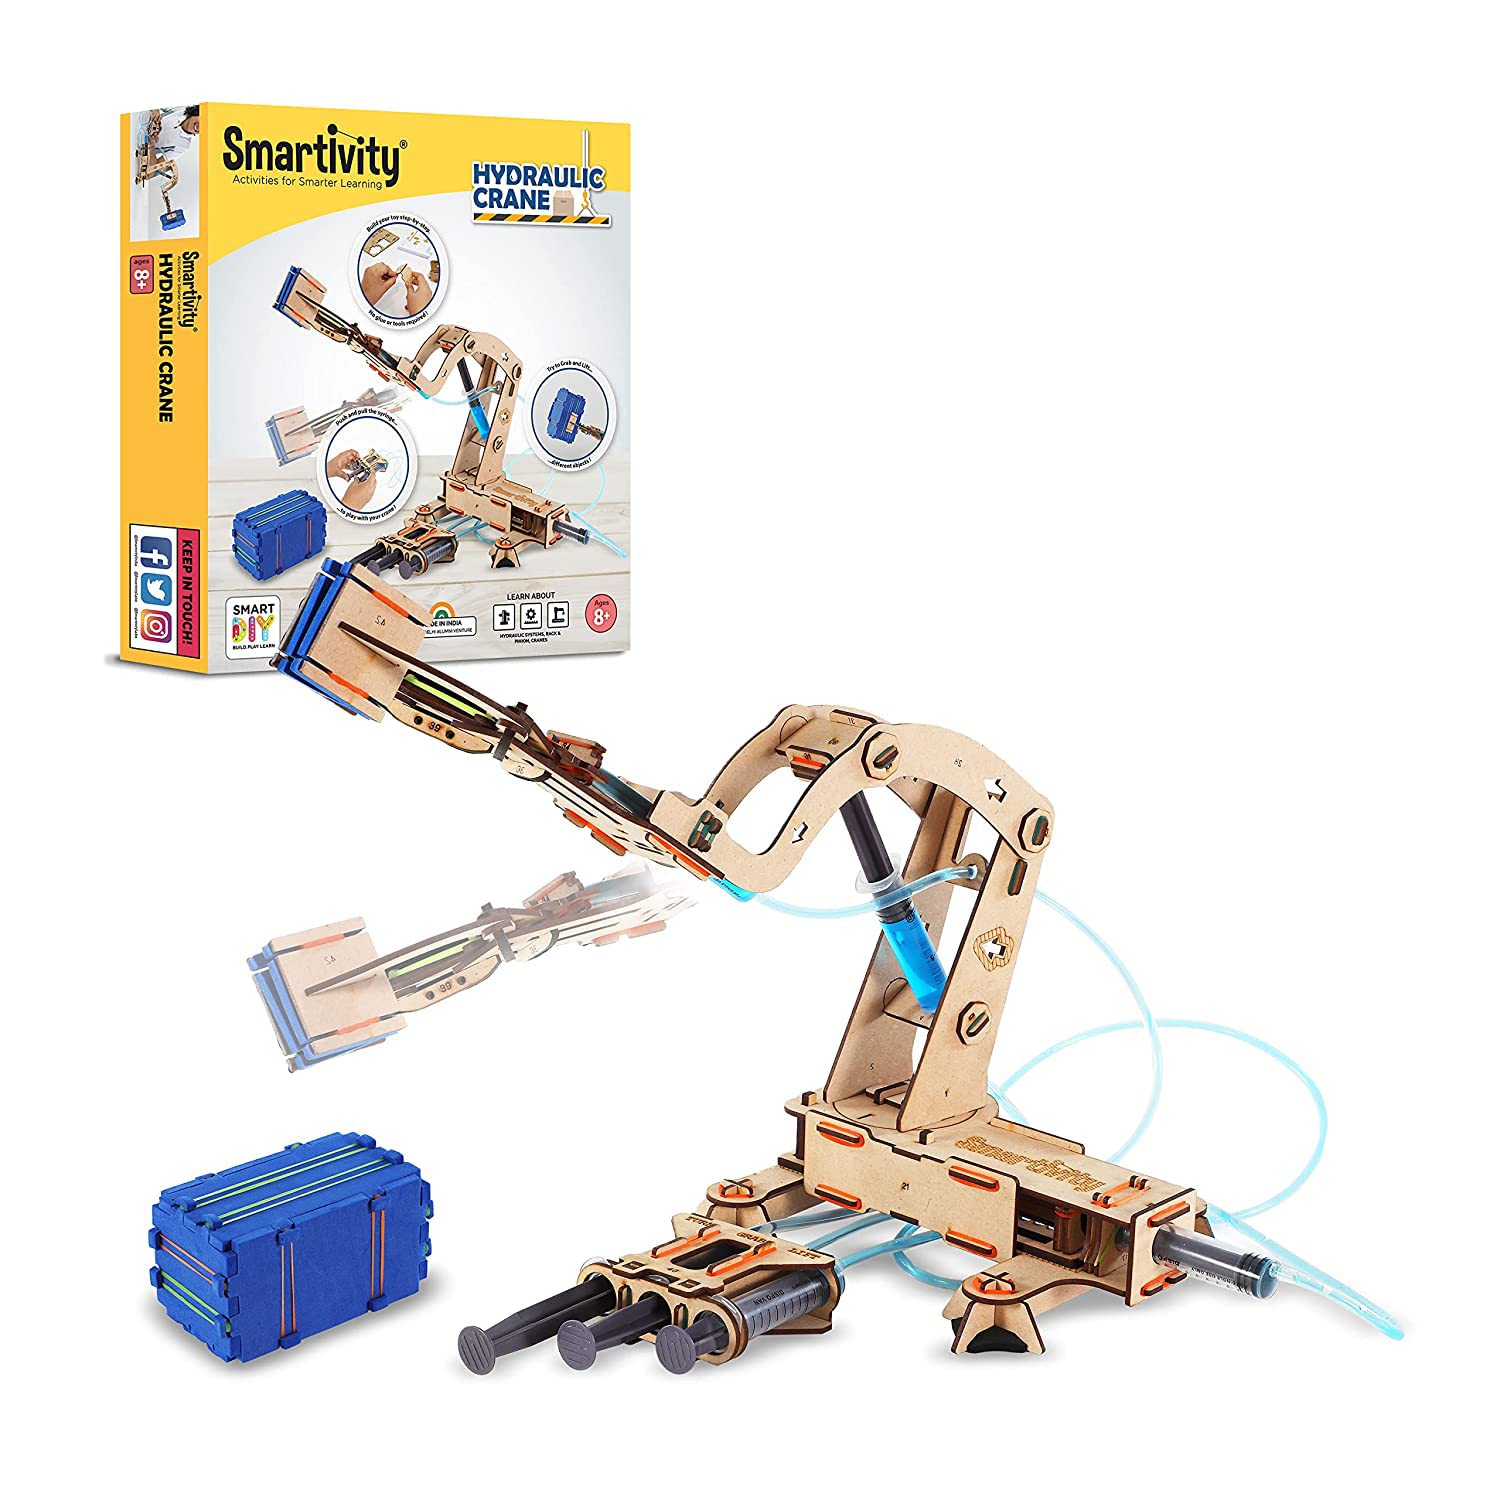 Buy Hydraulic Crane Toy Online - Best DIY STEAM Toys